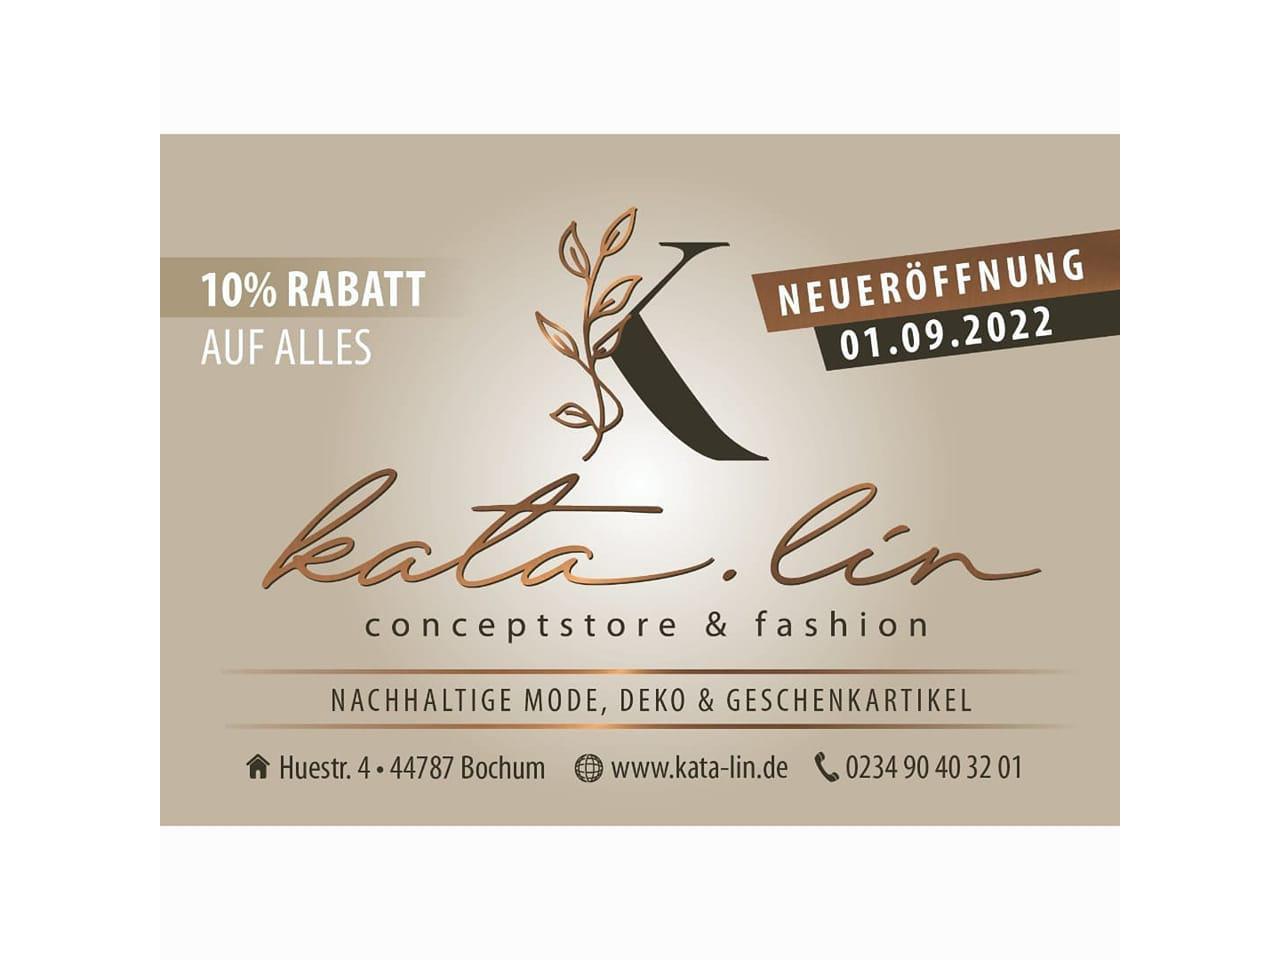 kata.lin conceptstore & fashion Bochum 0234 90403201